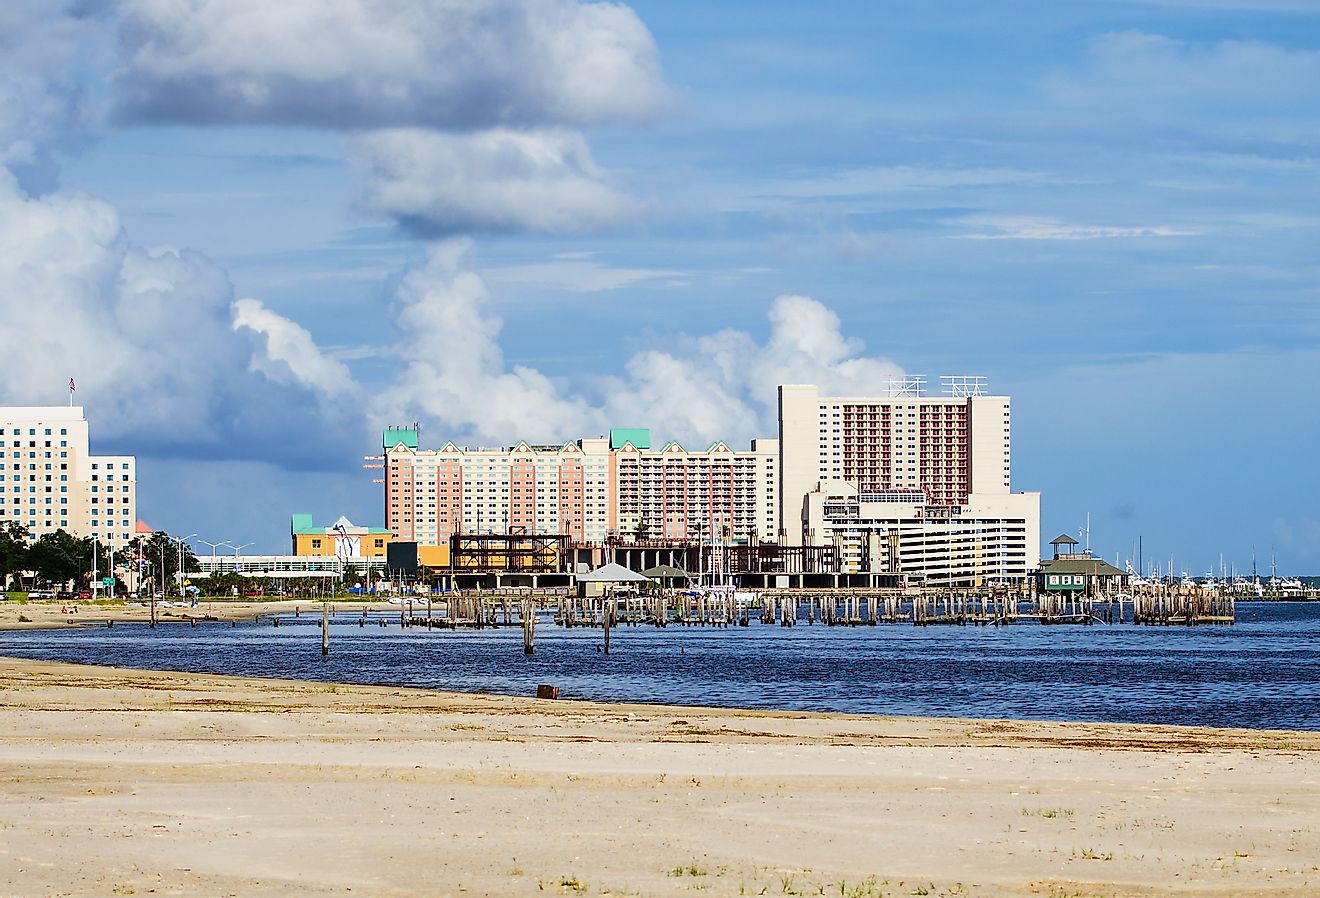 Biloxi, Mississippi, casinos and buildings along Gulf Coast shore.